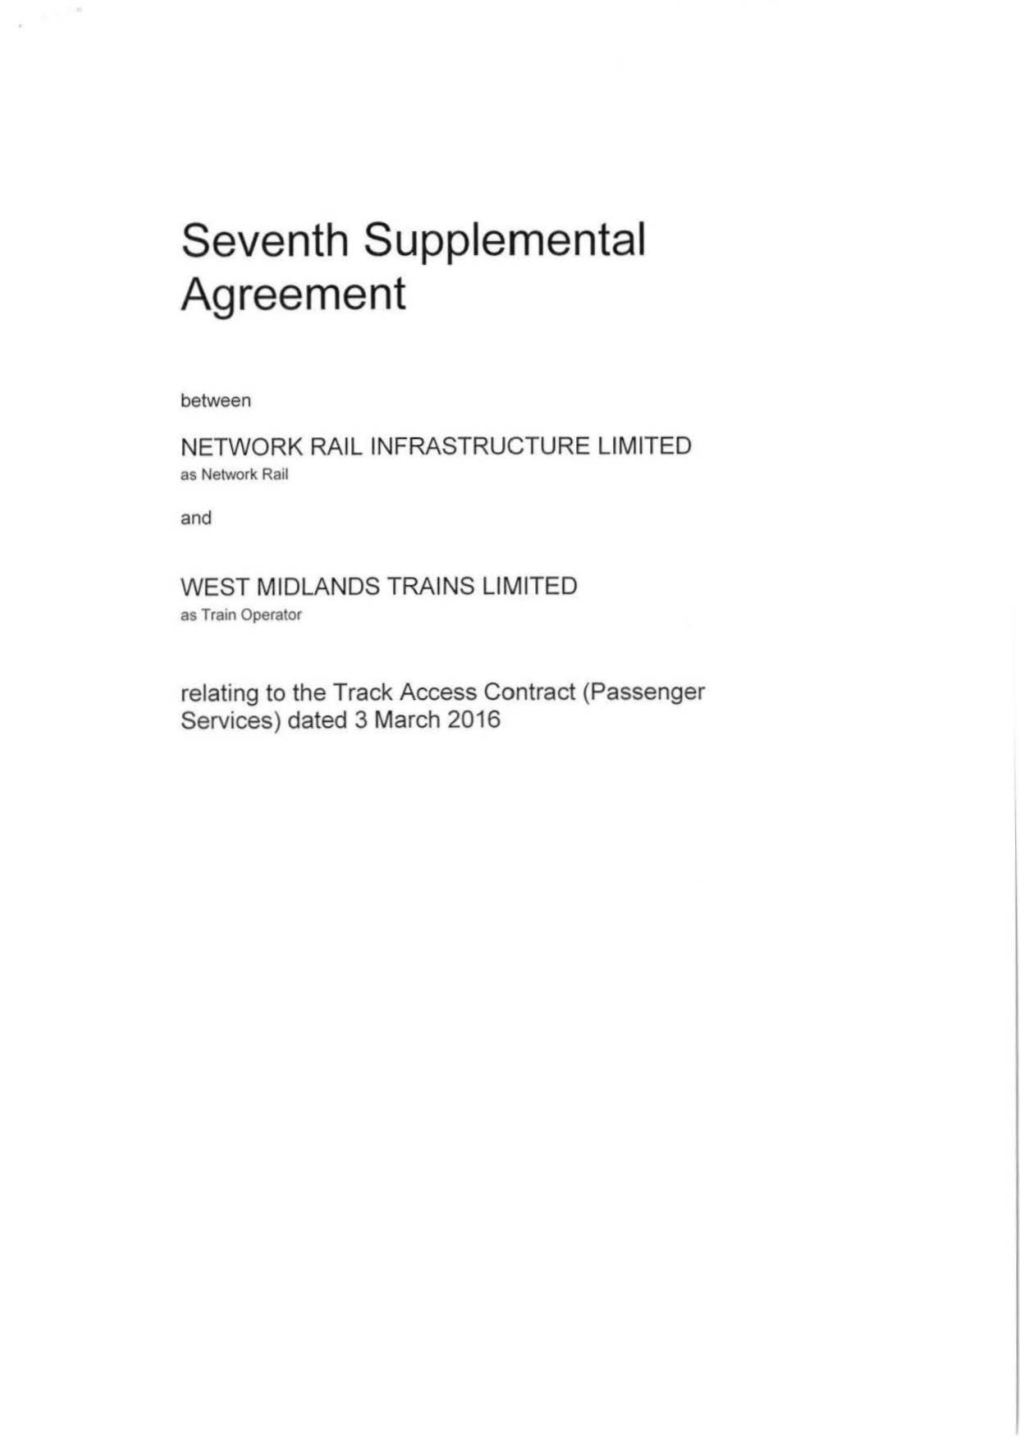 West Midlands Trains Limited 7Th Supplemental Agreement